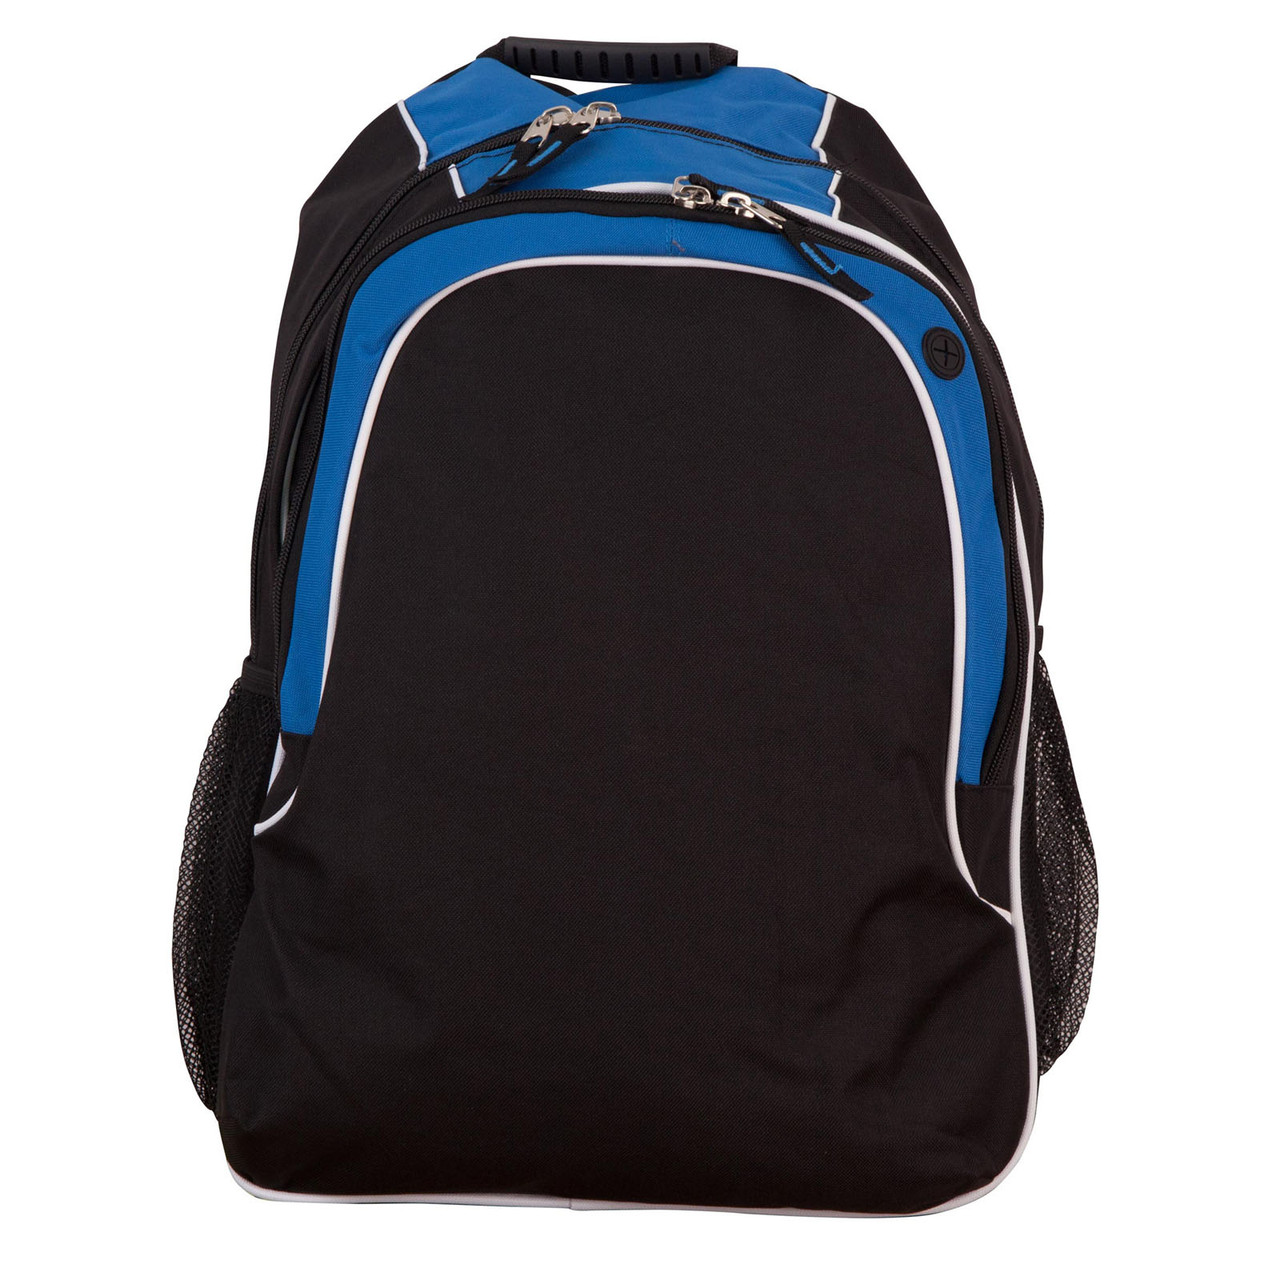 Sports Travel & Laptop Contrast Backpack | Shop Blank Bags Online Wholesale